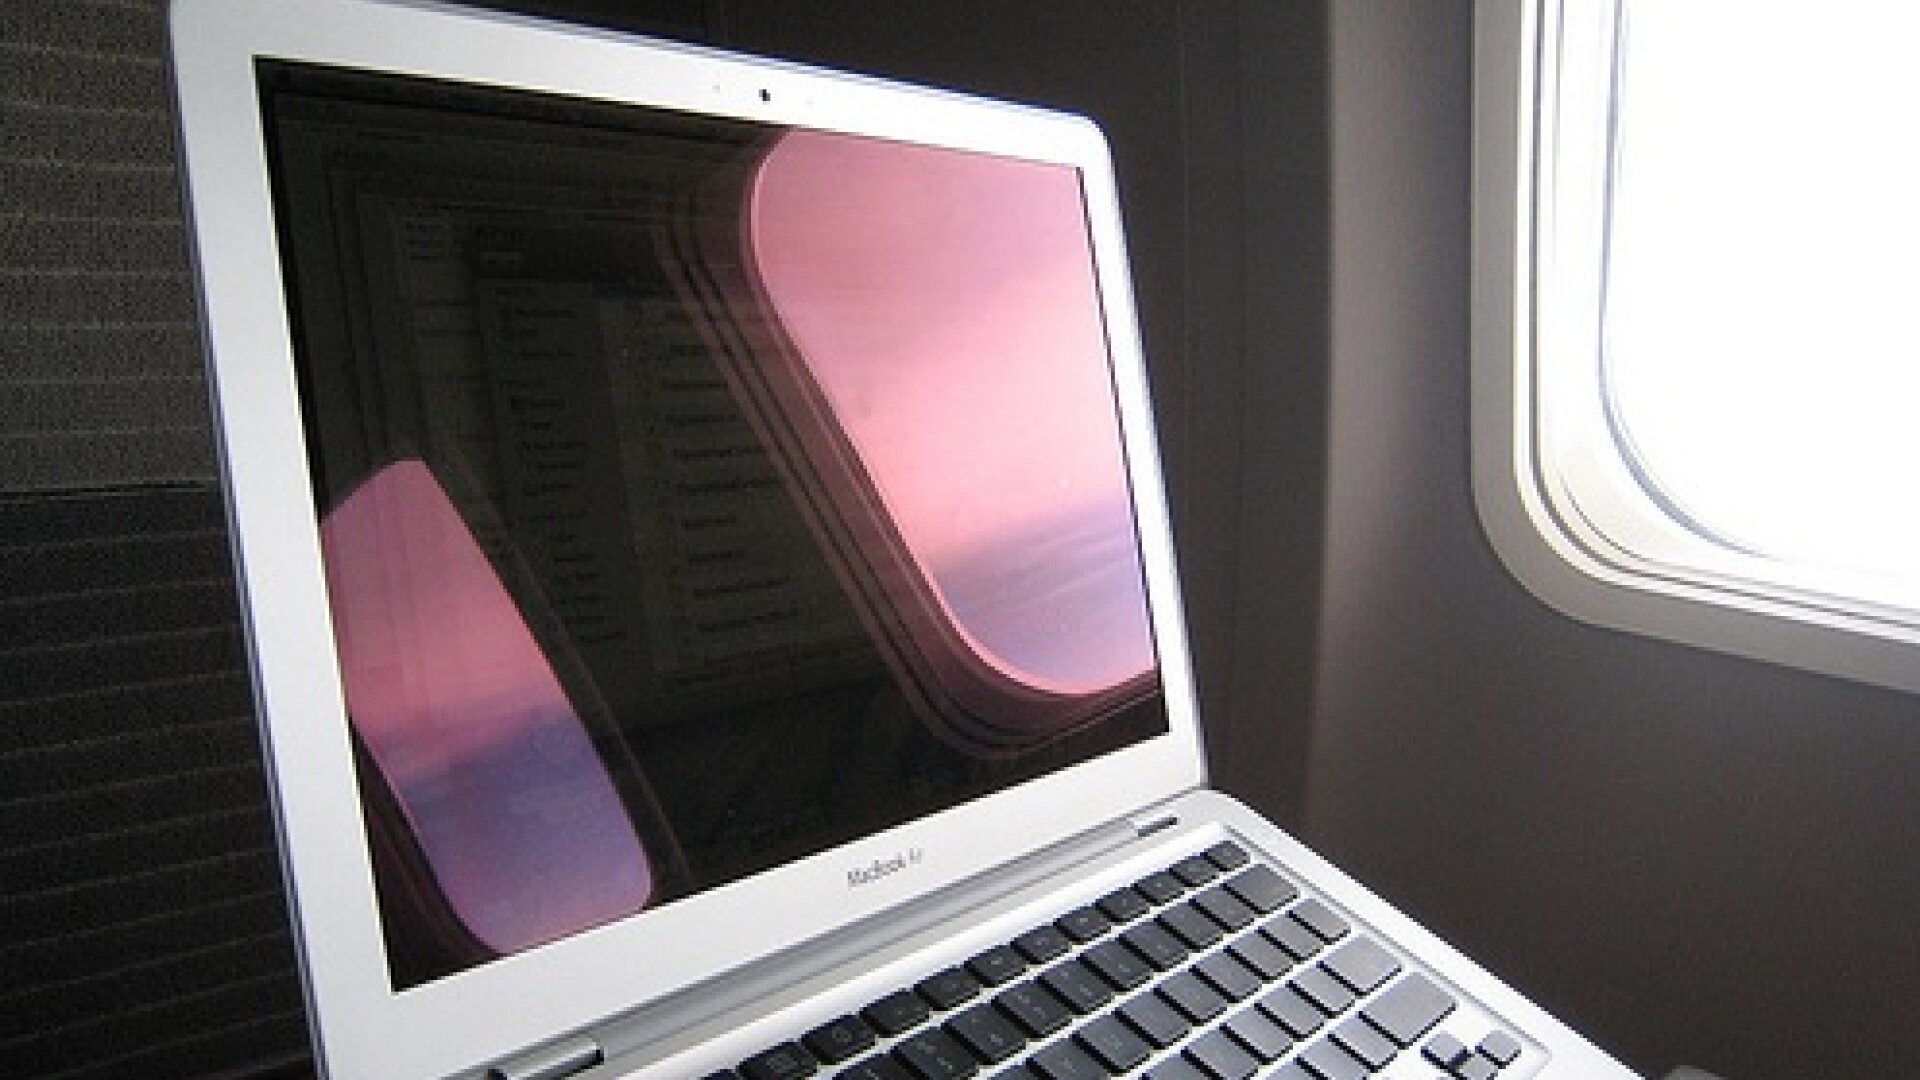 Internet in avion